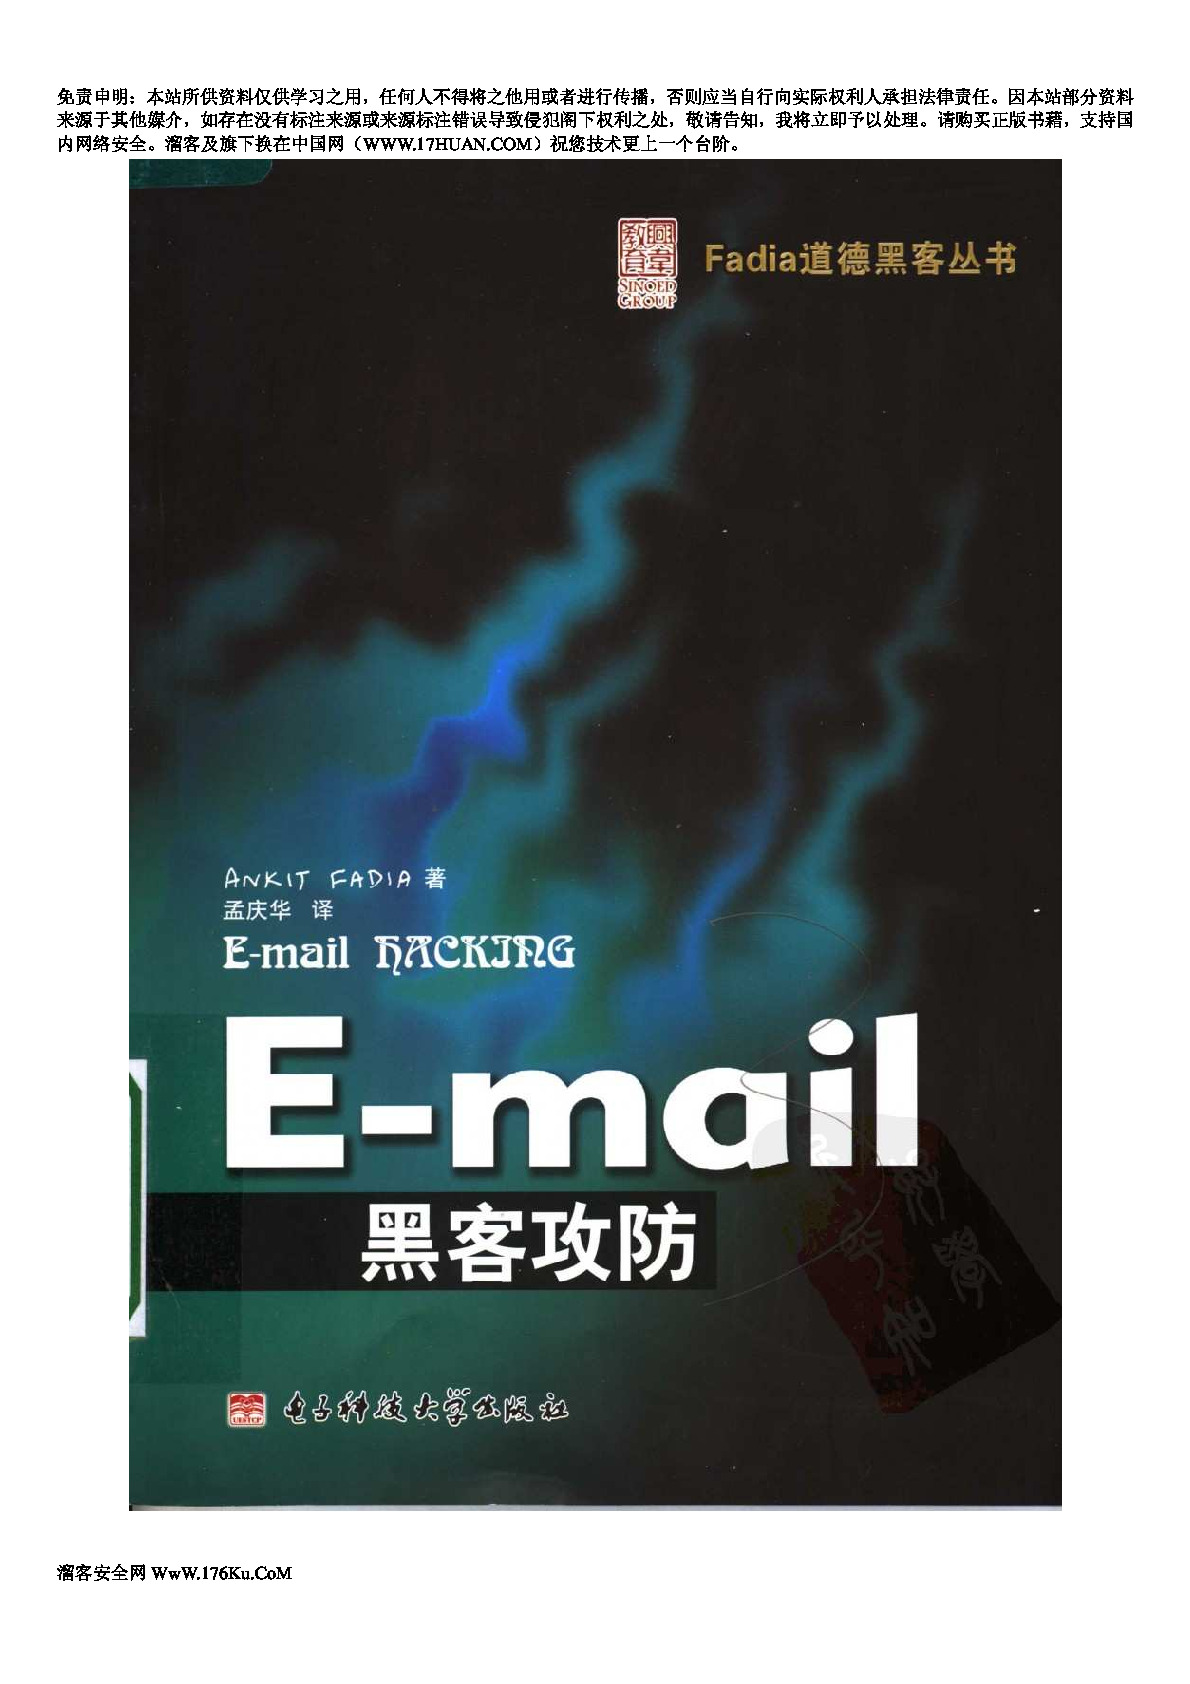 E-mail黑客攻防